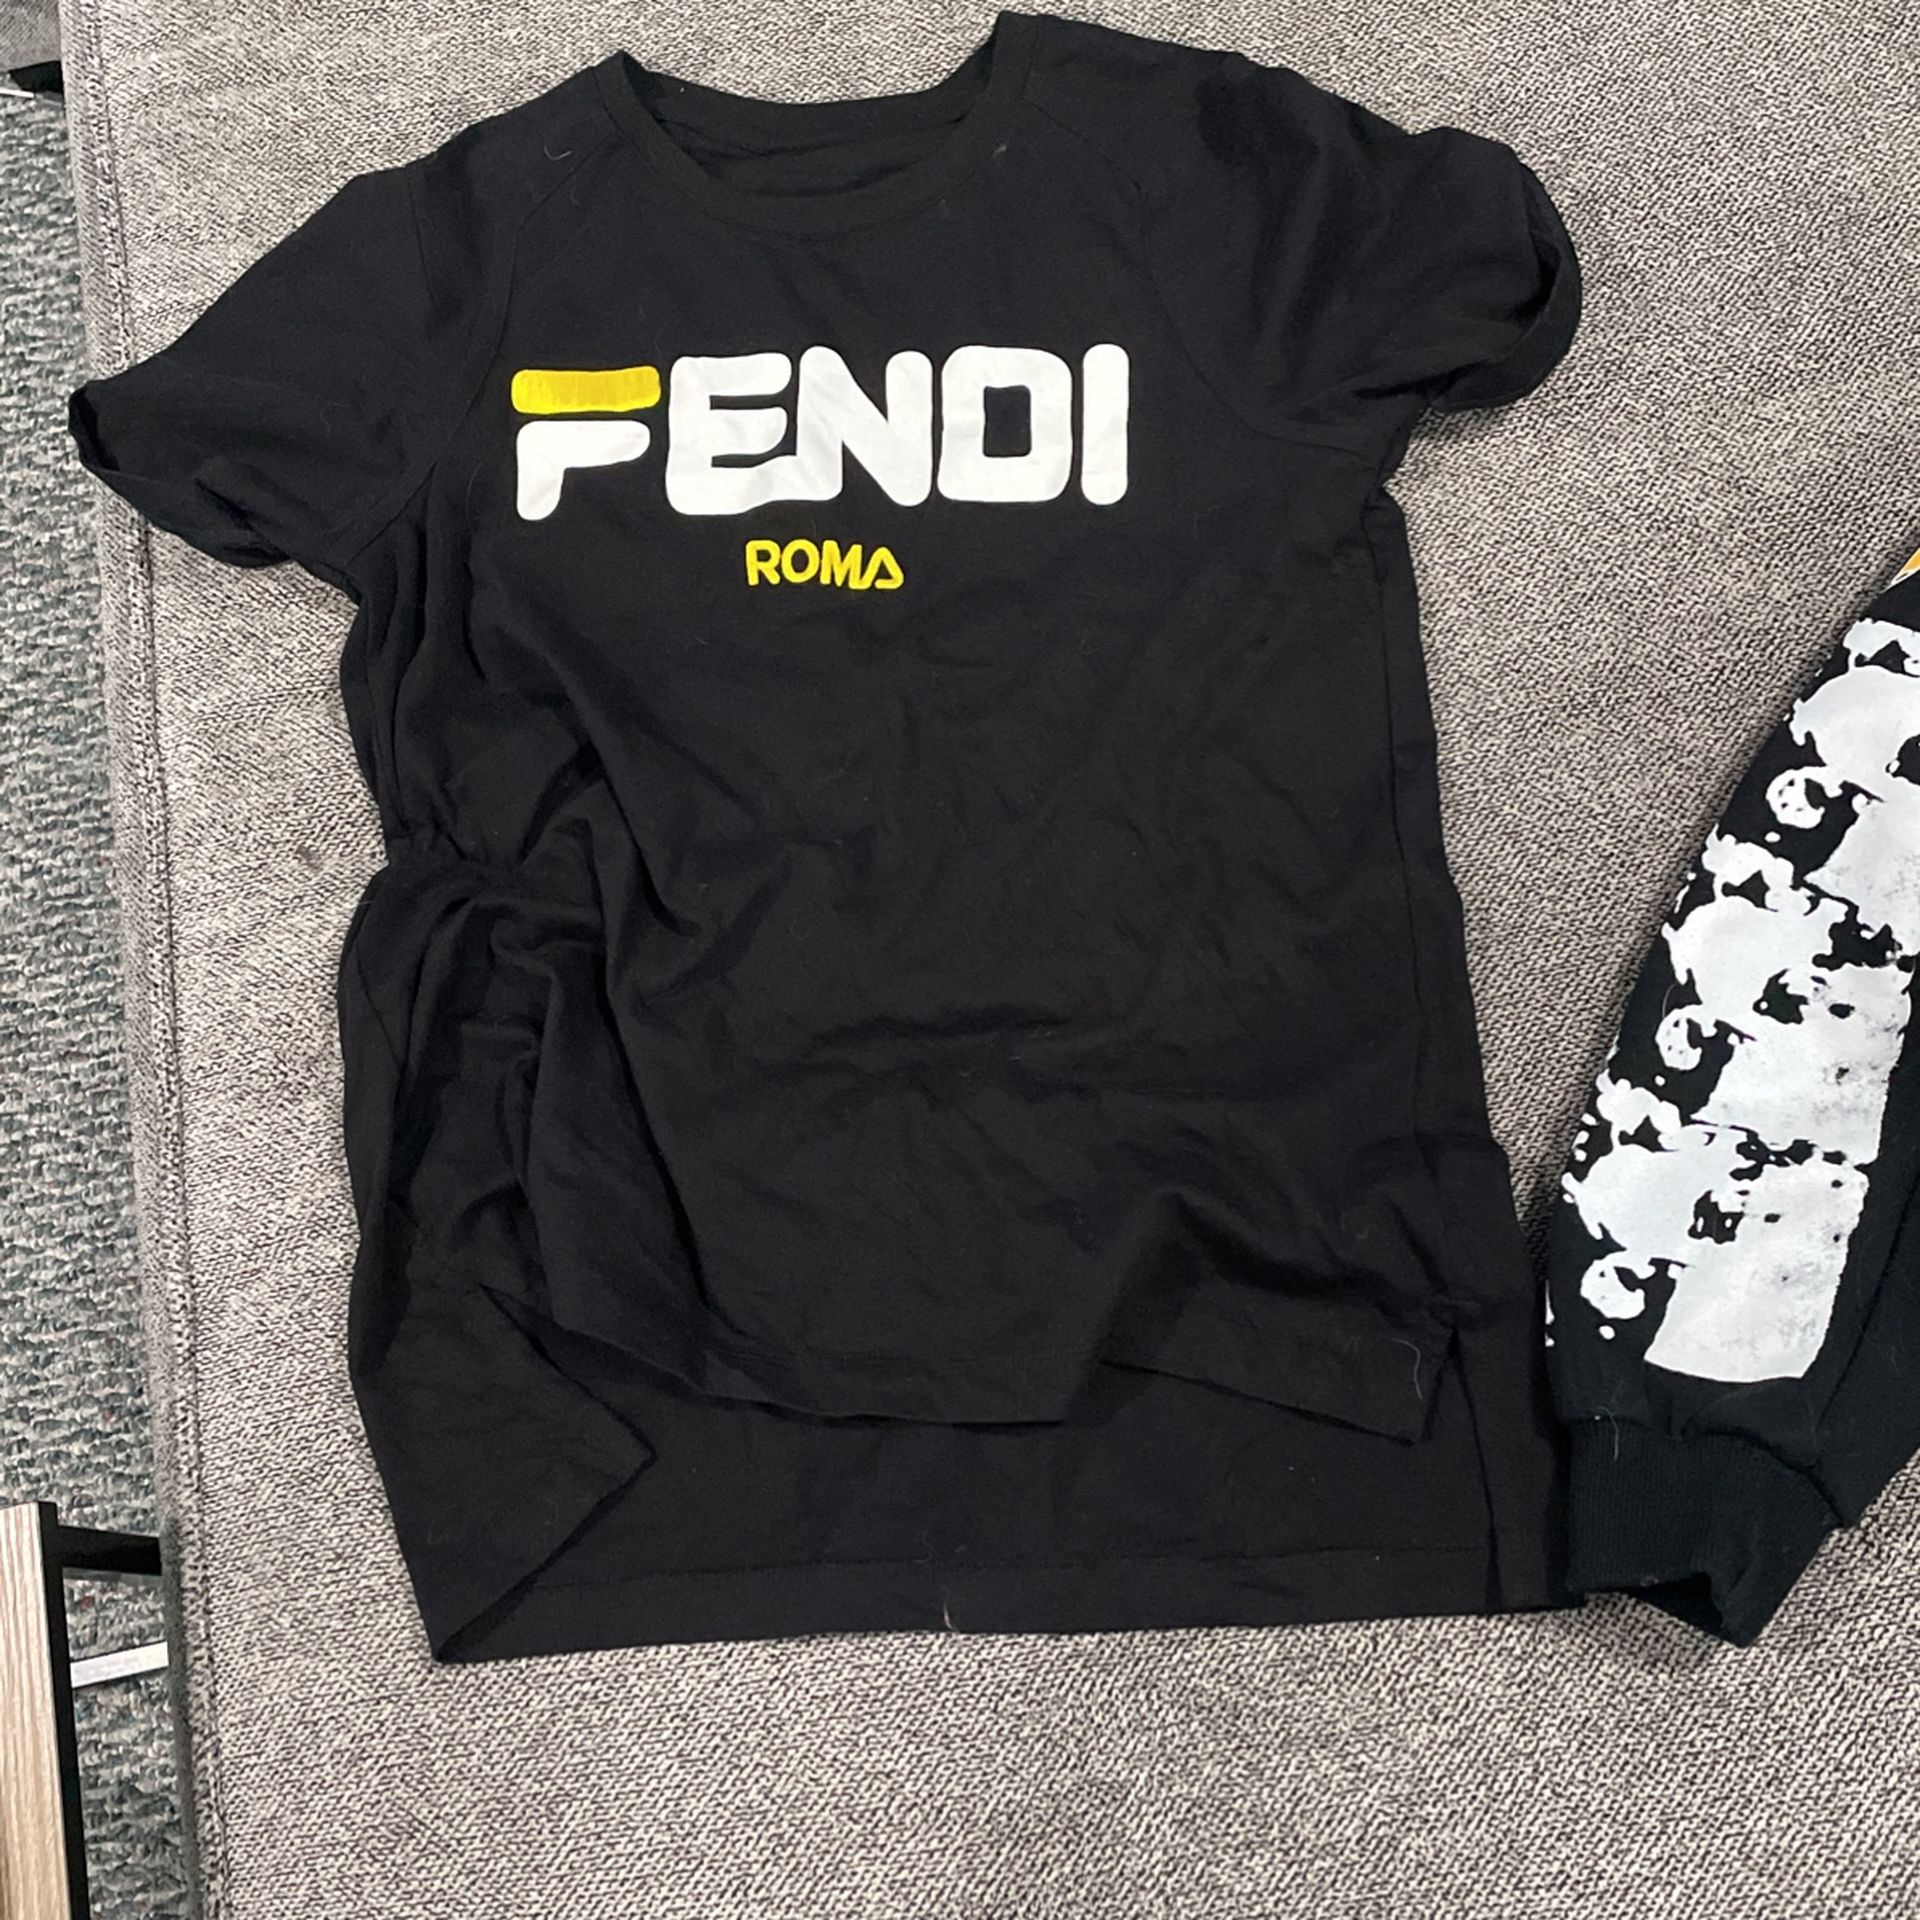 fendi special edition shirt 